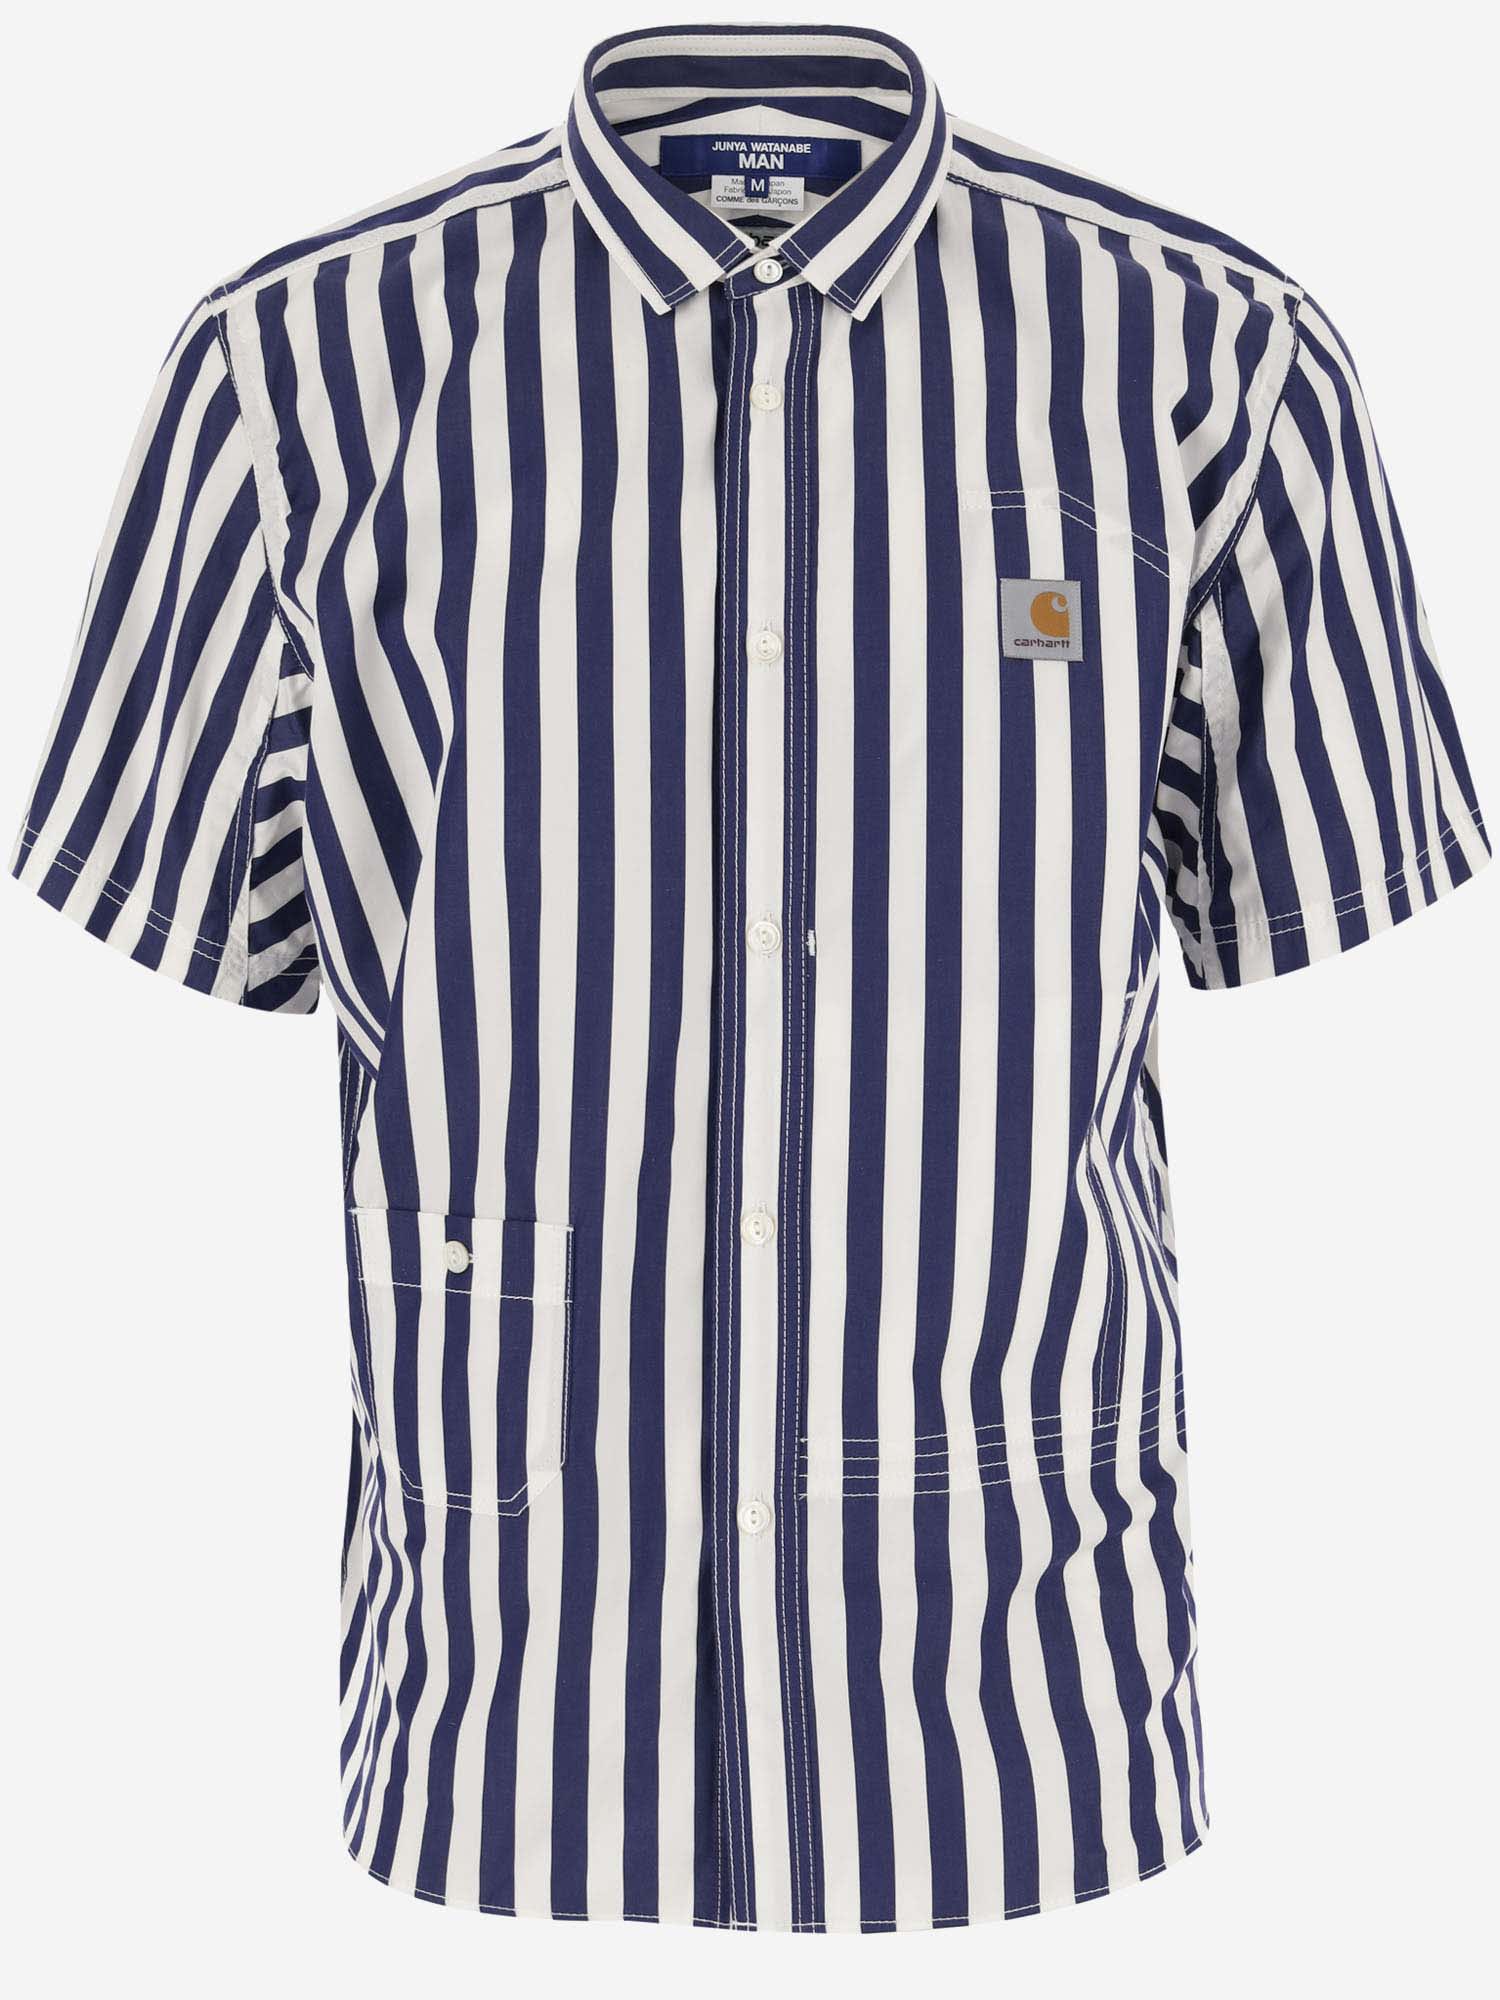 X Carhartt Striped Pattern Cotton Shirt